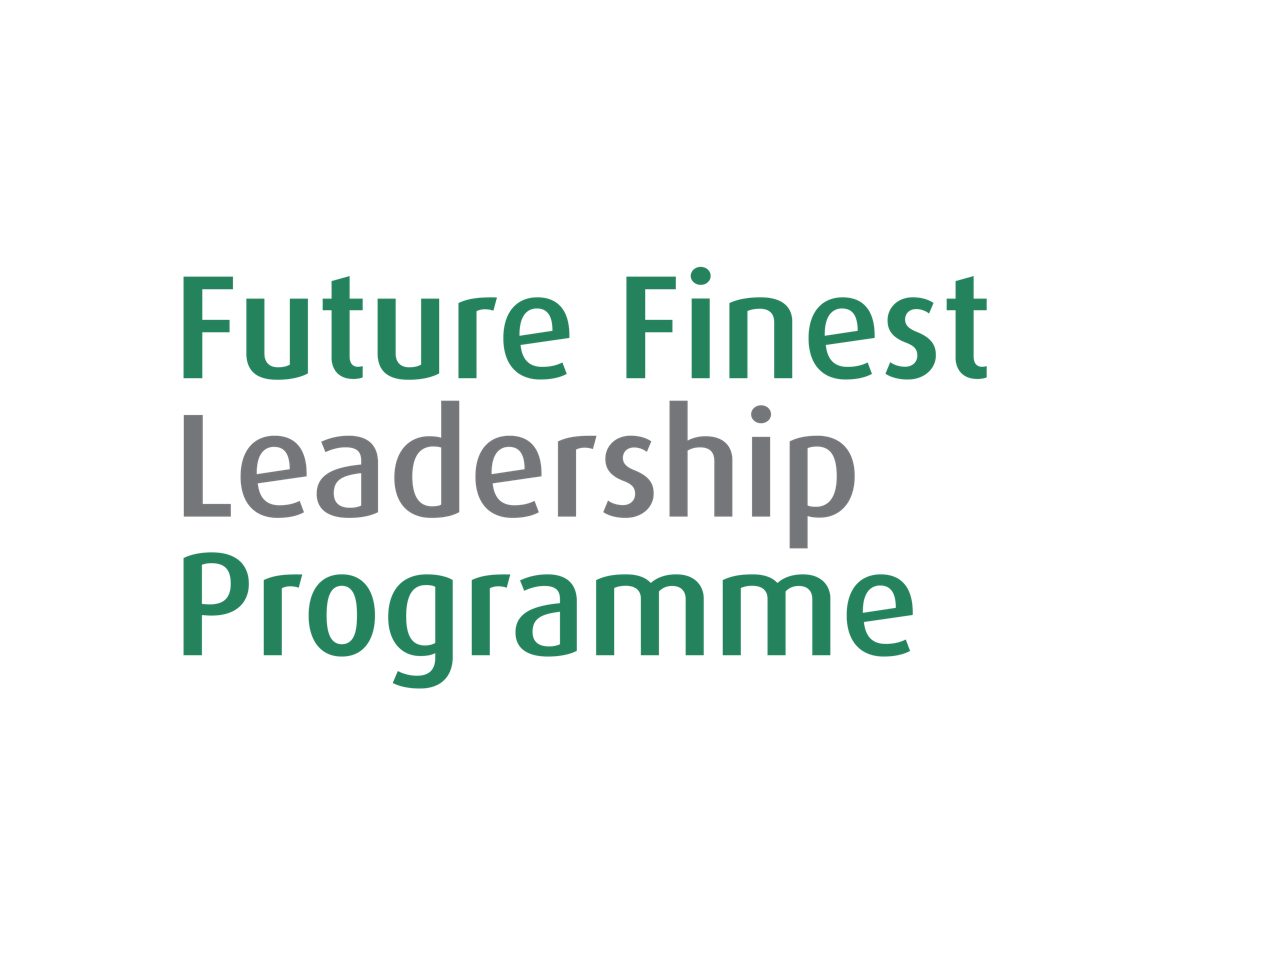 Future Finest Leadership Programme